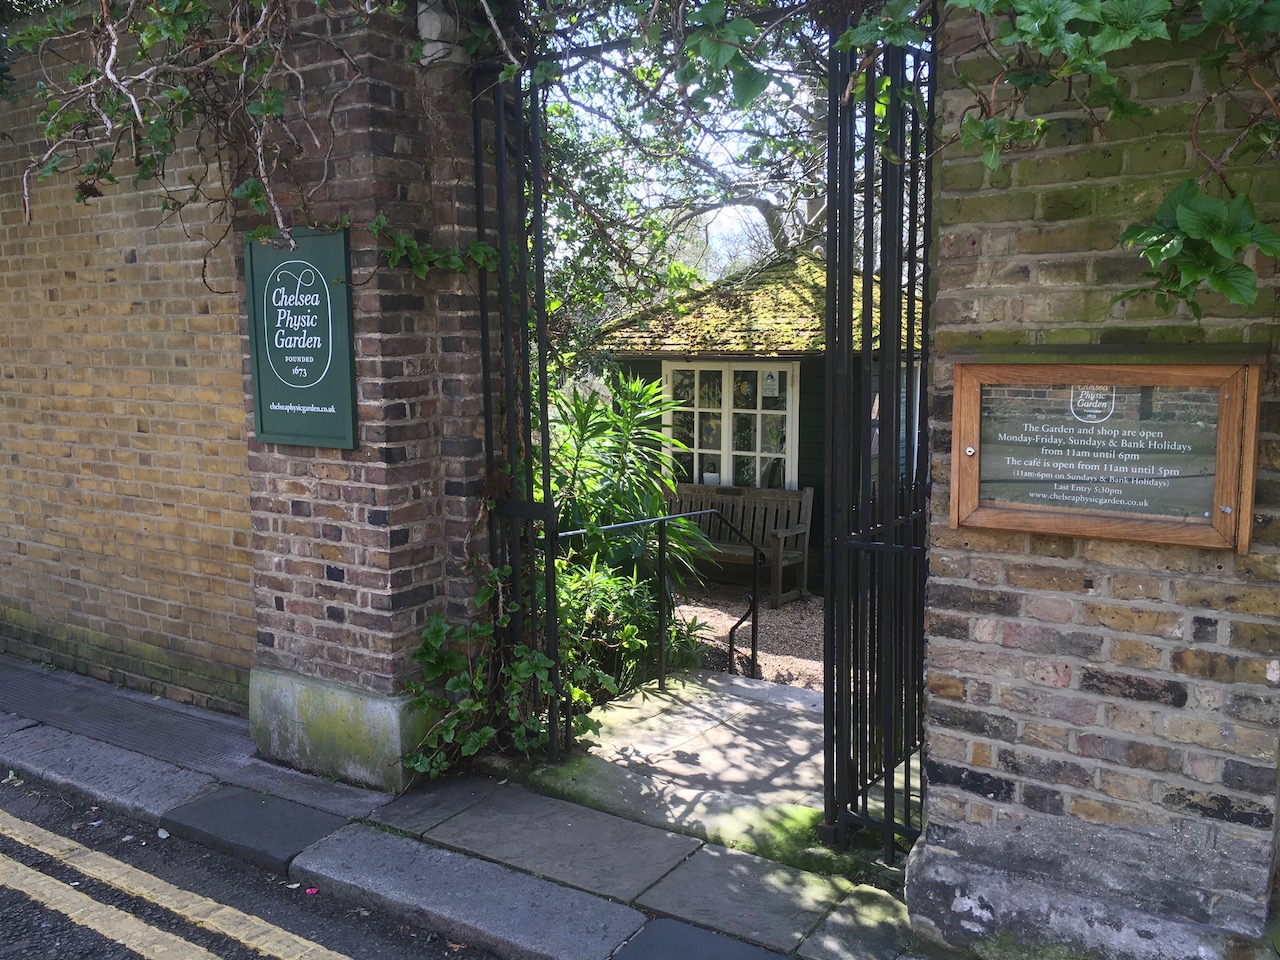 Chelsea Physic Garden - a secret piece of London